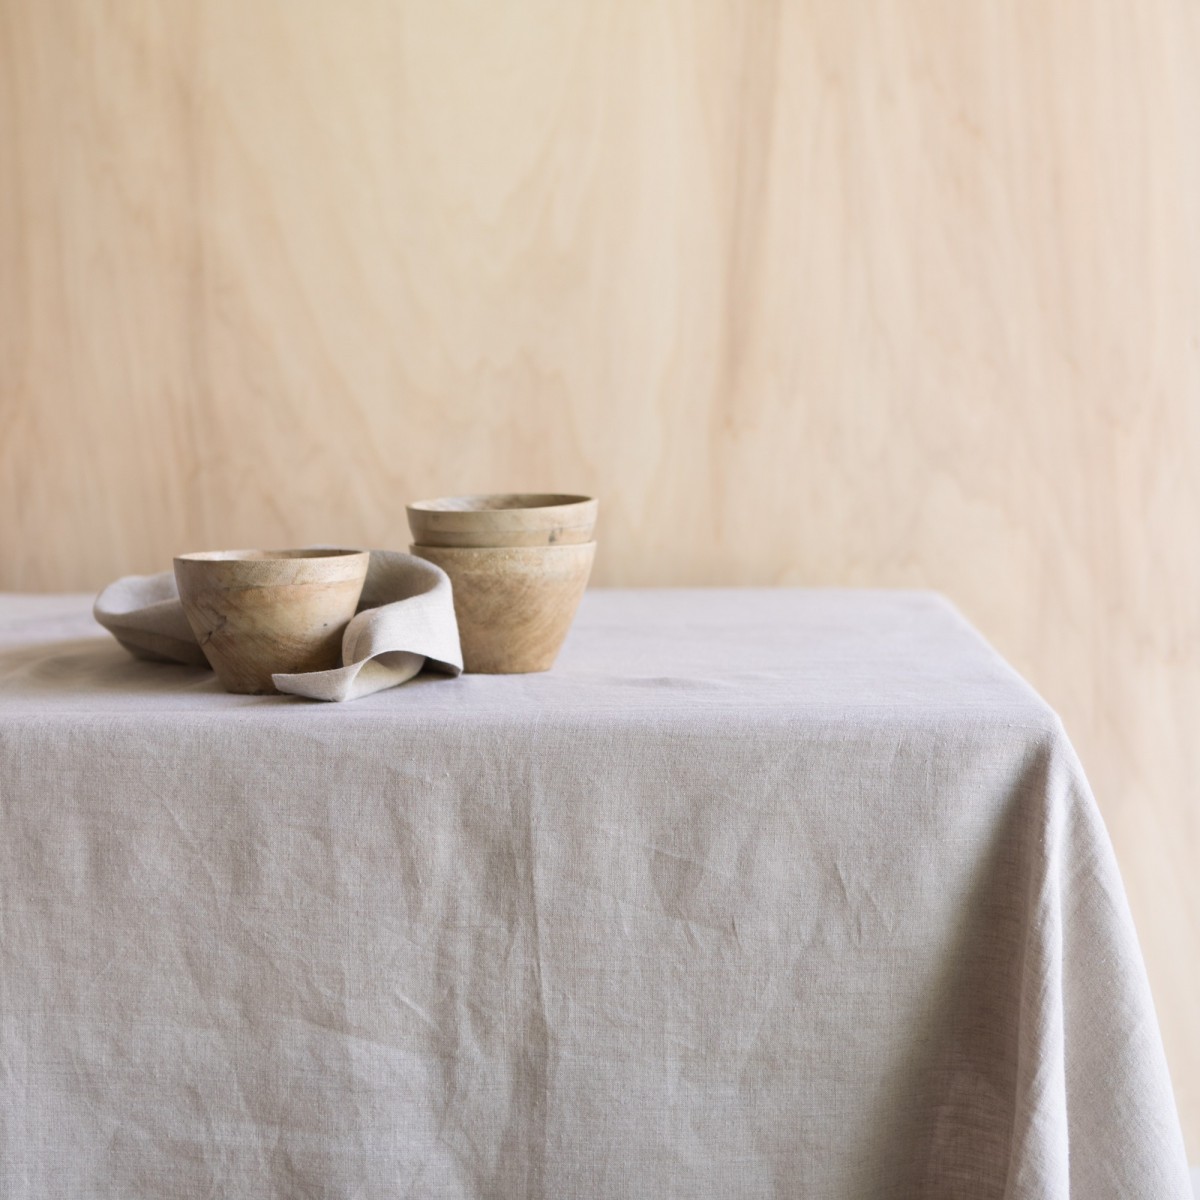 Washed Linen Table Napkin • Local & Natural European Linen • Kalani